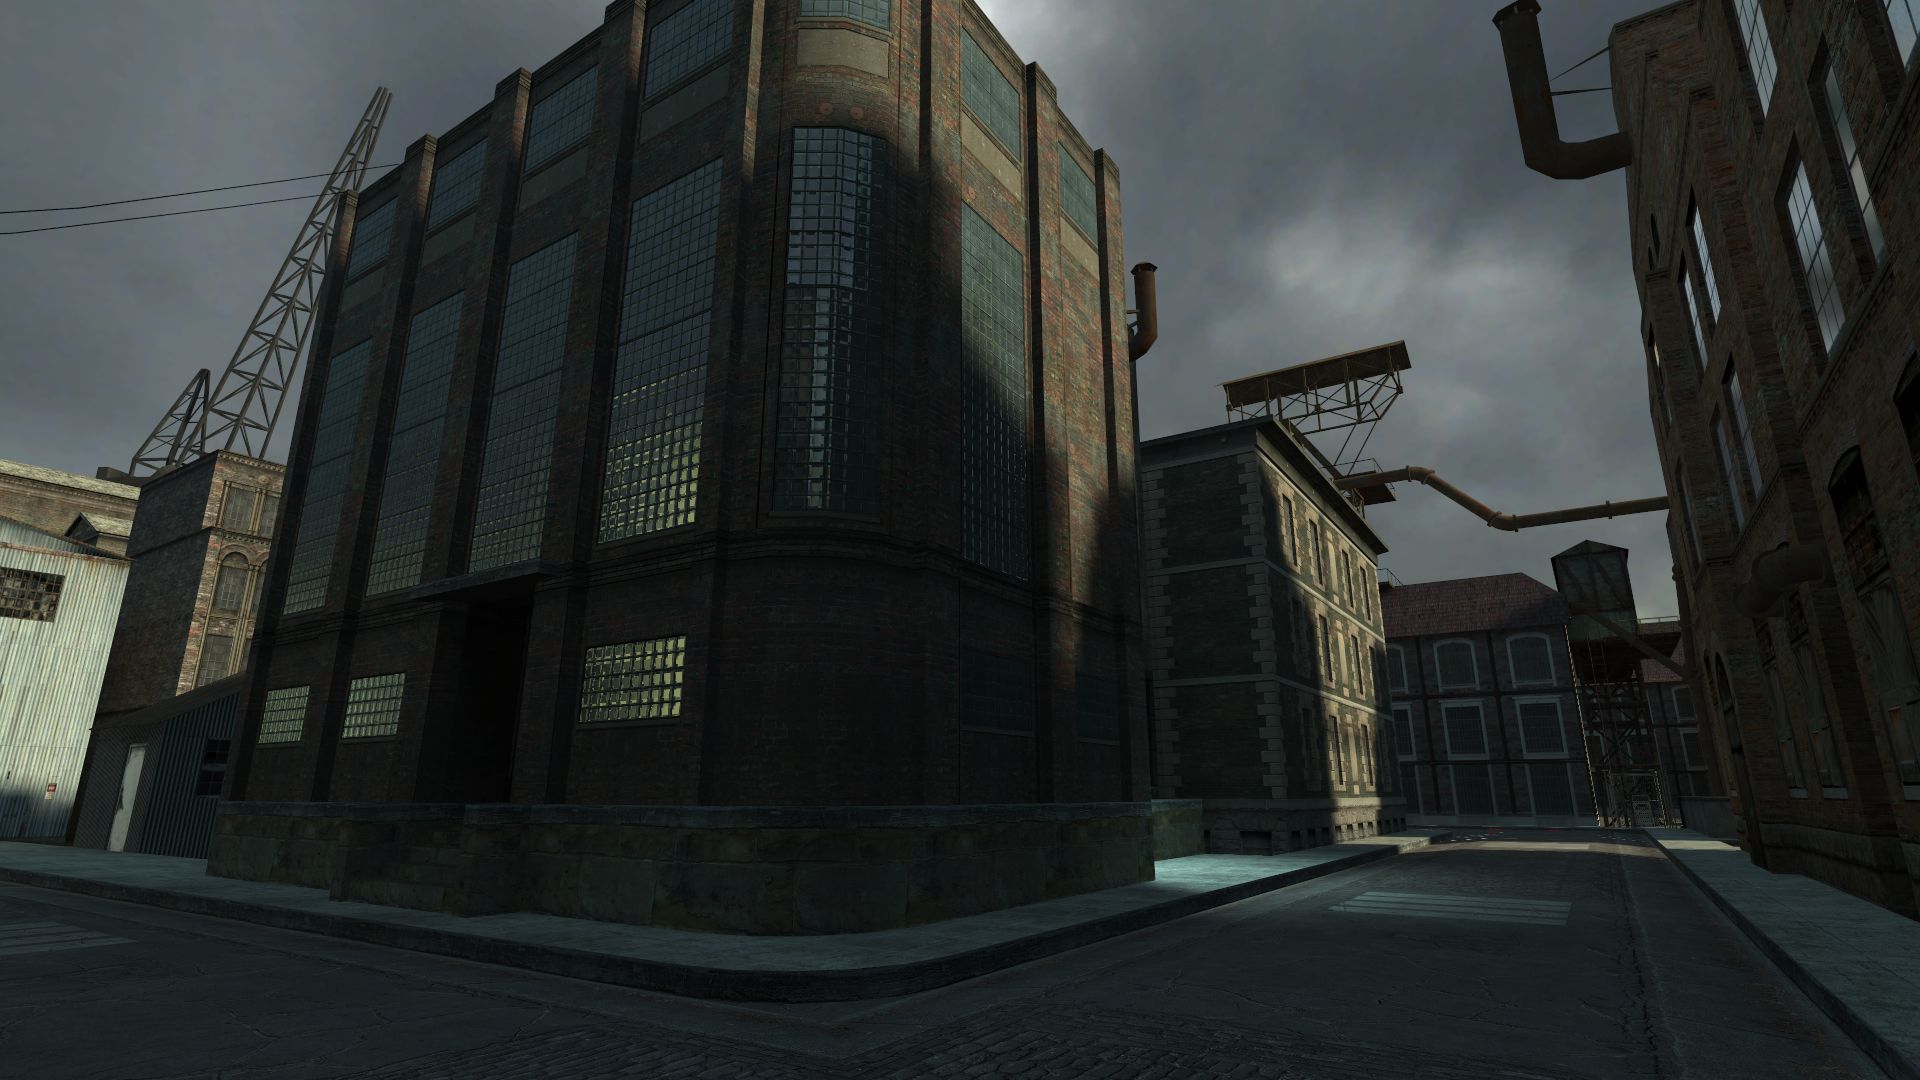 Ис вил. Half Life 2 buildings. Город из халф лайф 2 бета. Half Life 2 Beta Maps. Префаб Индастриал.